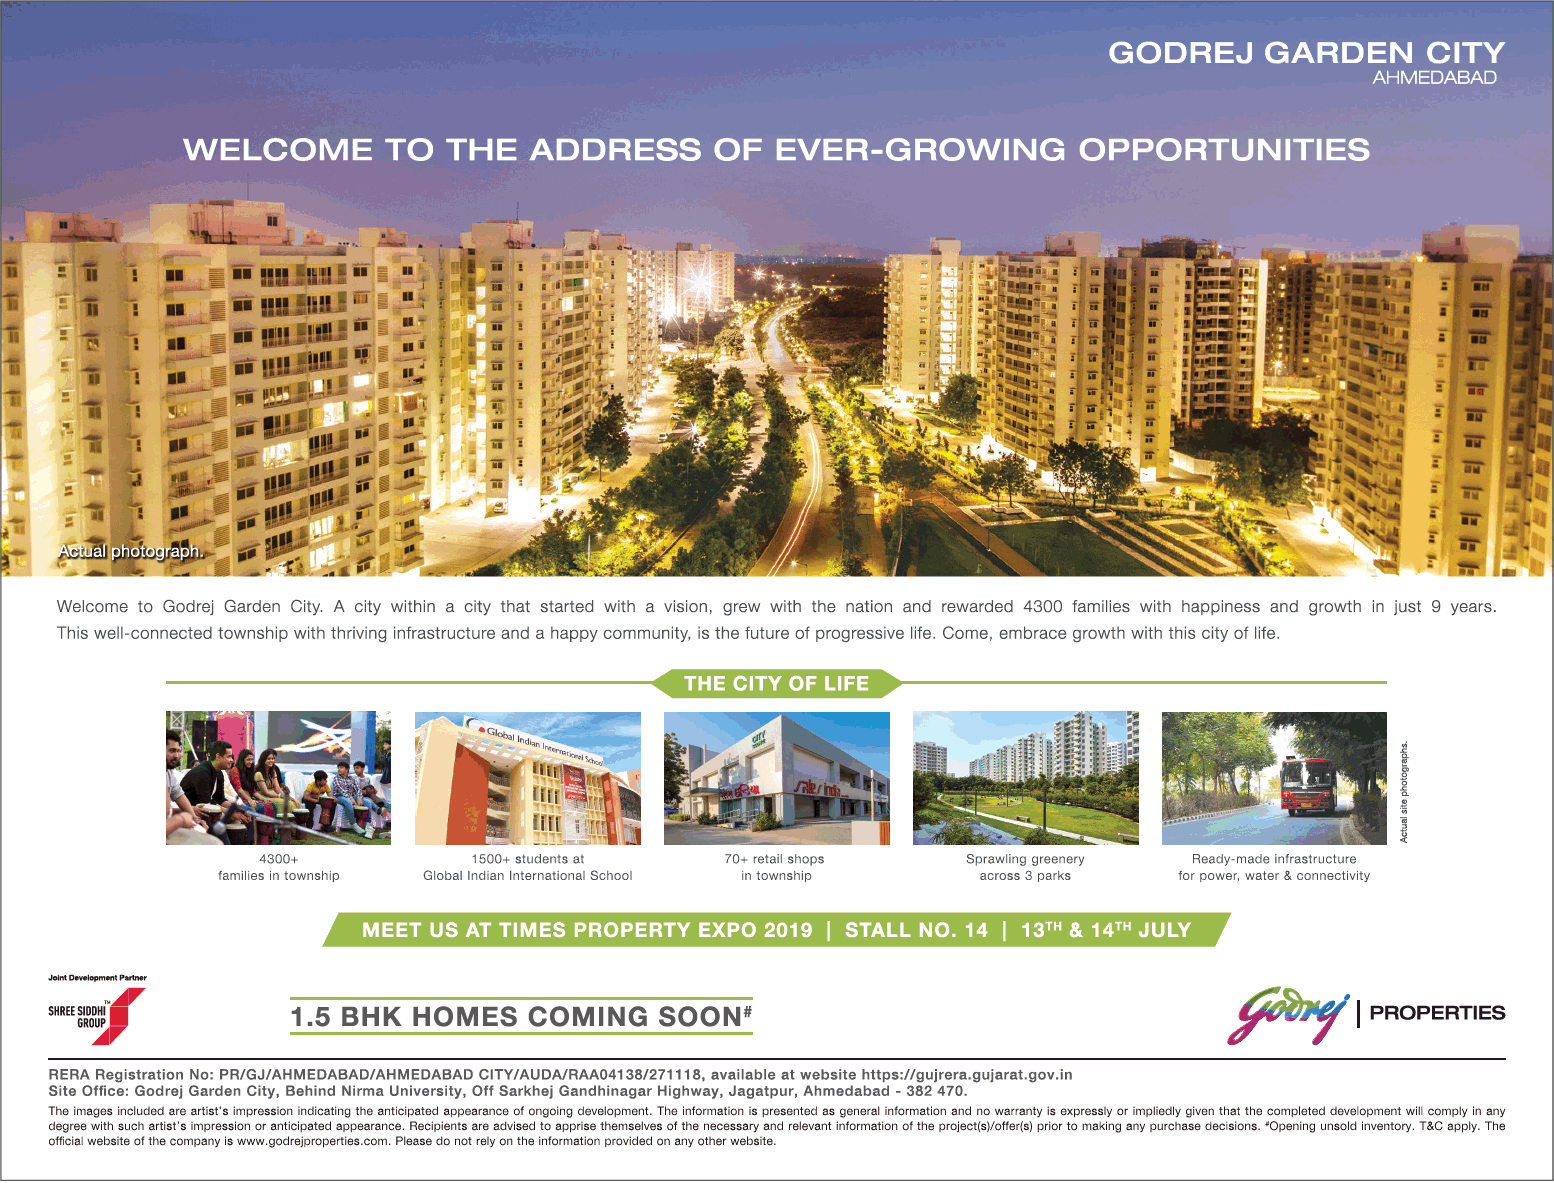 Book 1.5 BHK homes at Godrej Garden City, Ahmedabad Update